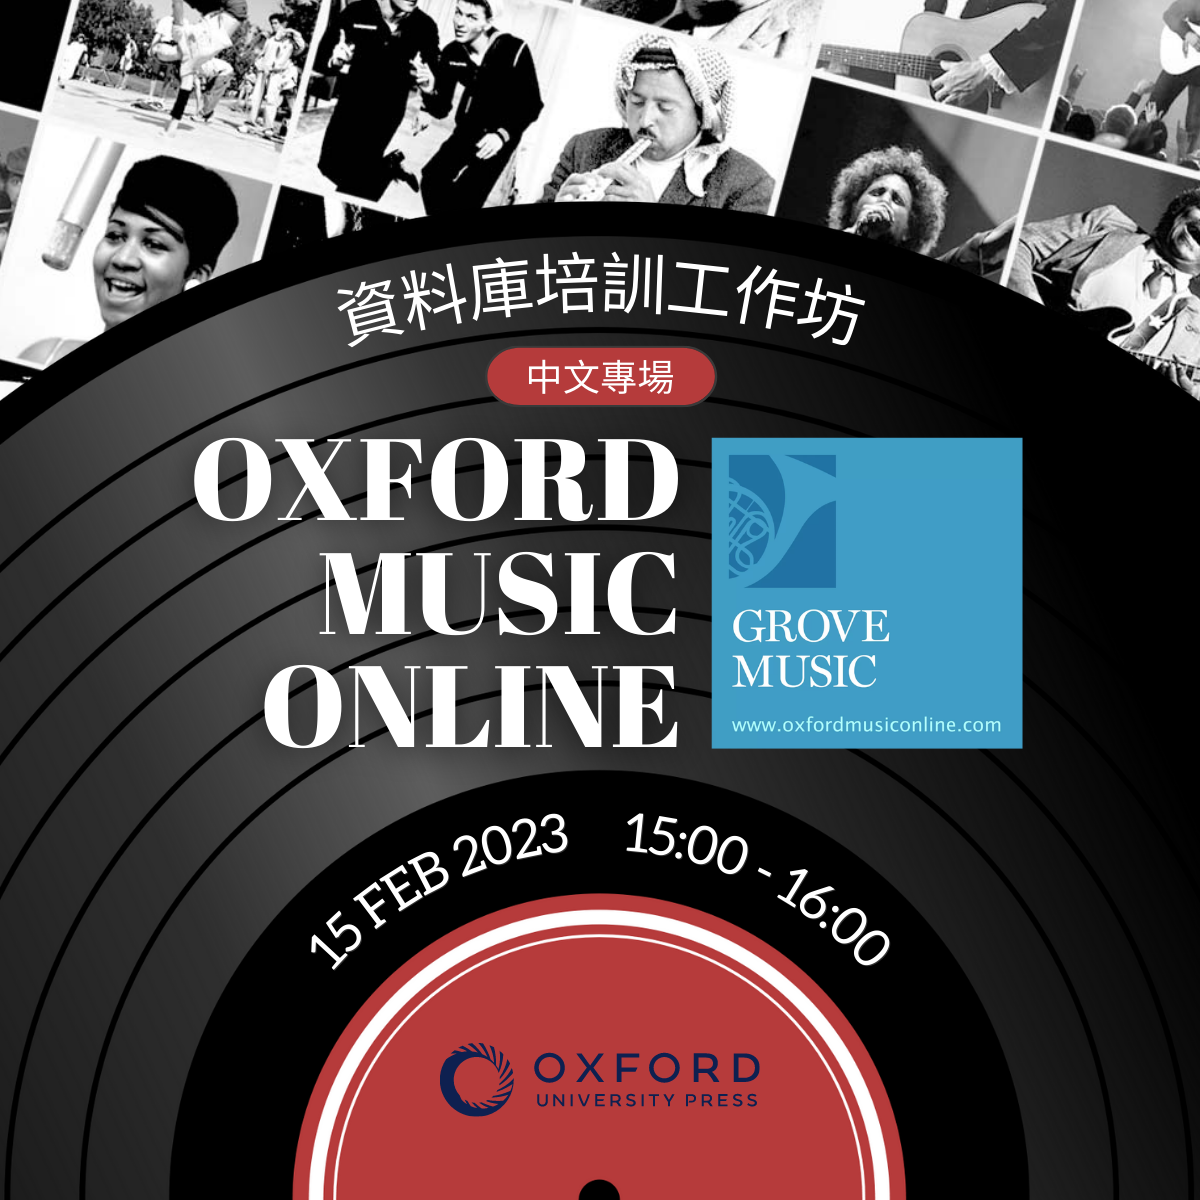 Oxford Music Online Training Workshop (Mandarin Session)